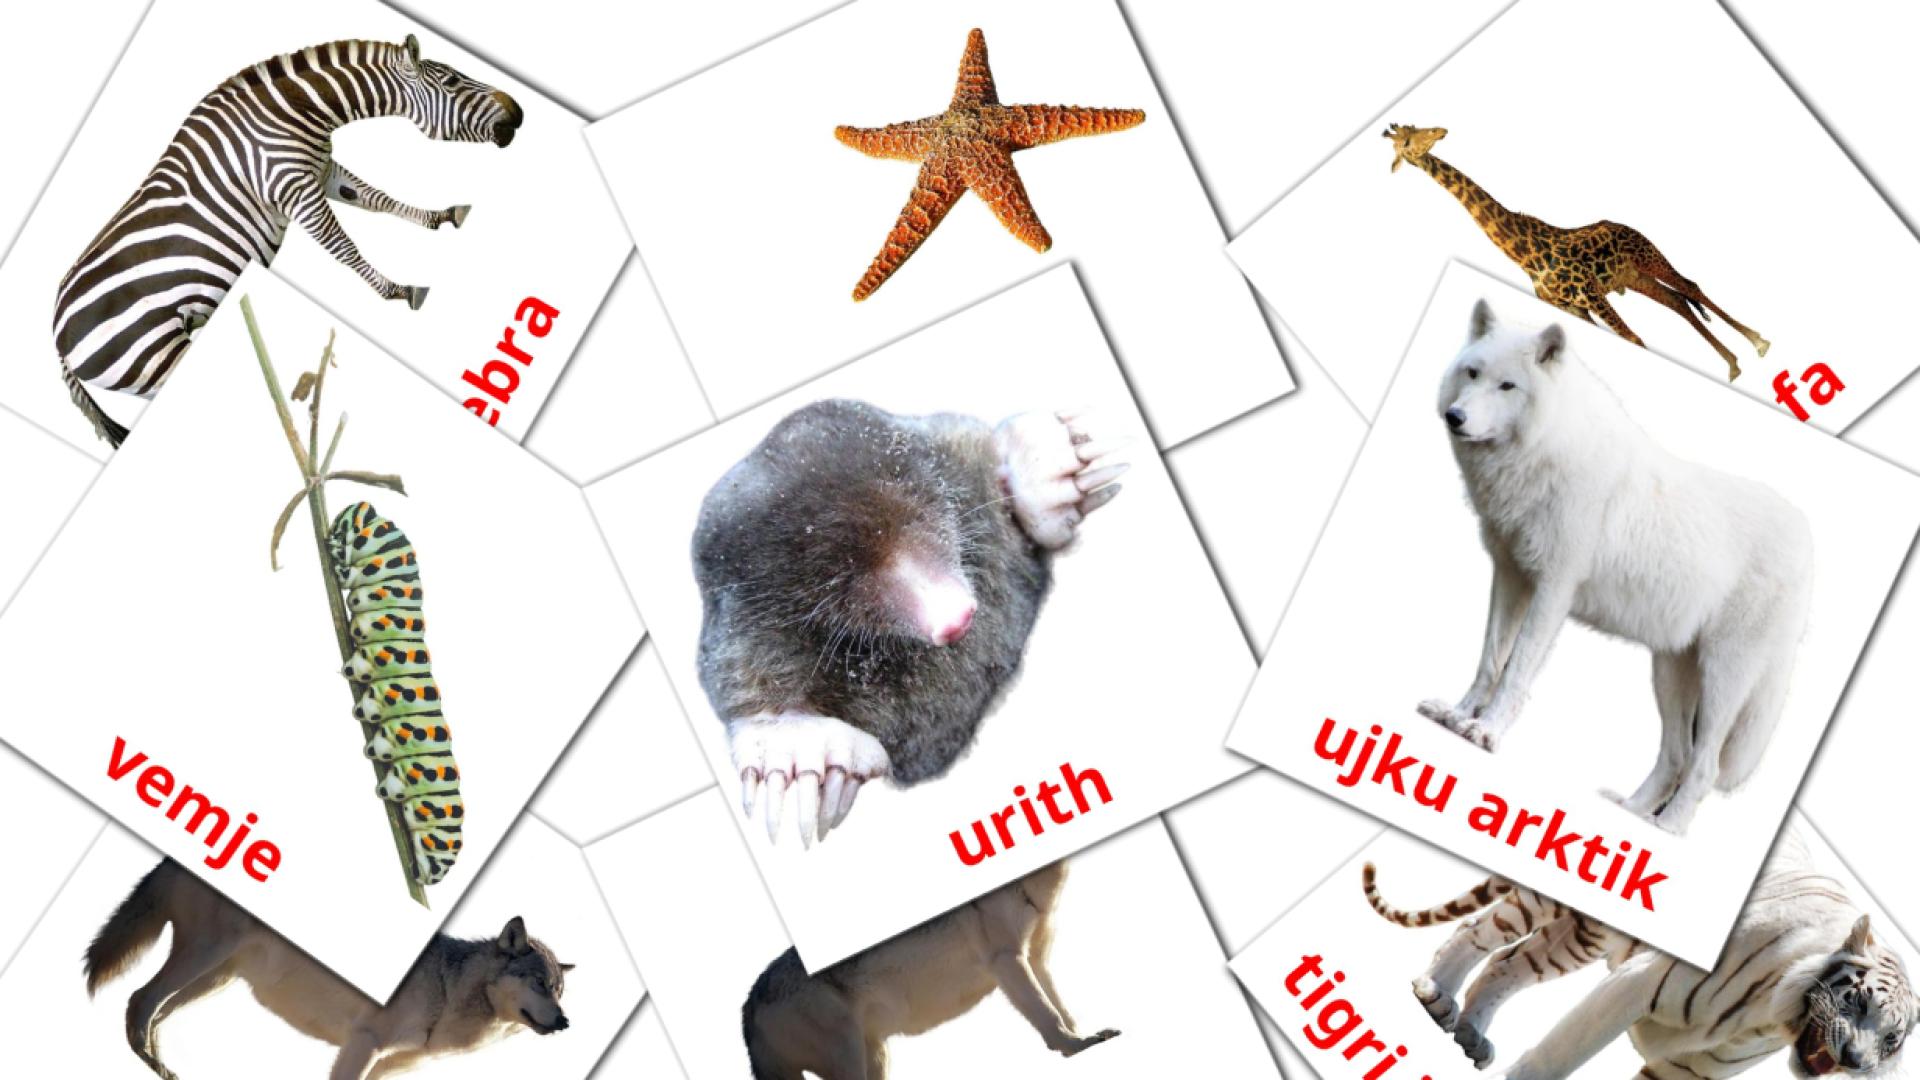 Kafshët albanian vocabulary flashcards